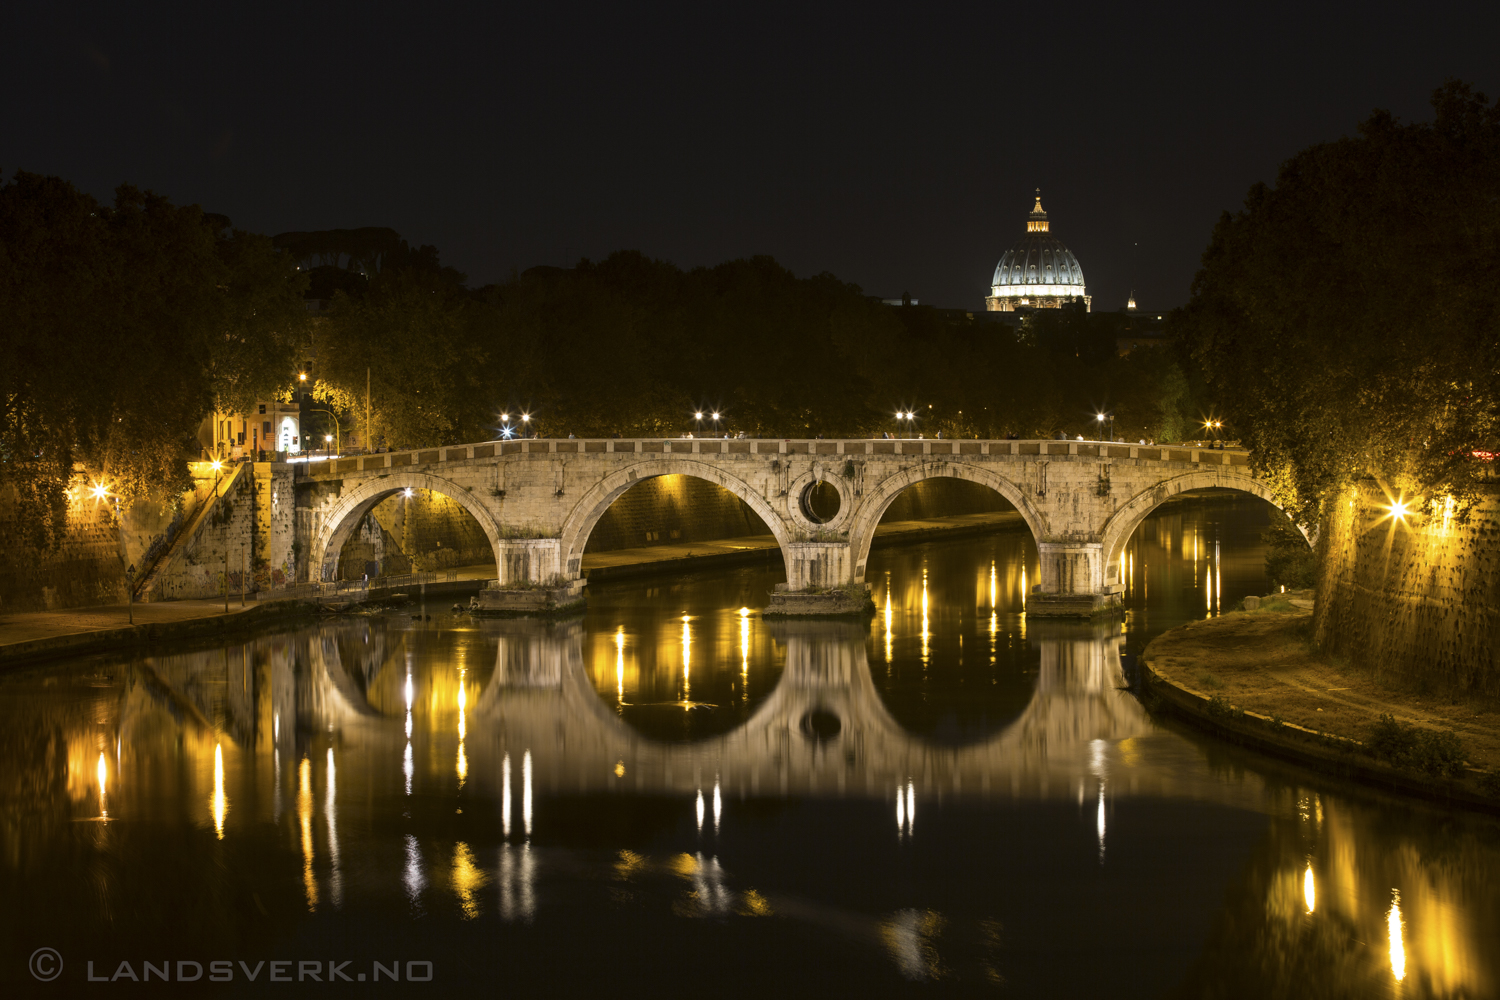 Fiume Tevere. Rome, Italy. 

(Canon EOS 5D Mark III / Canon EF 70-200mm f/2.8 L IS II USM)